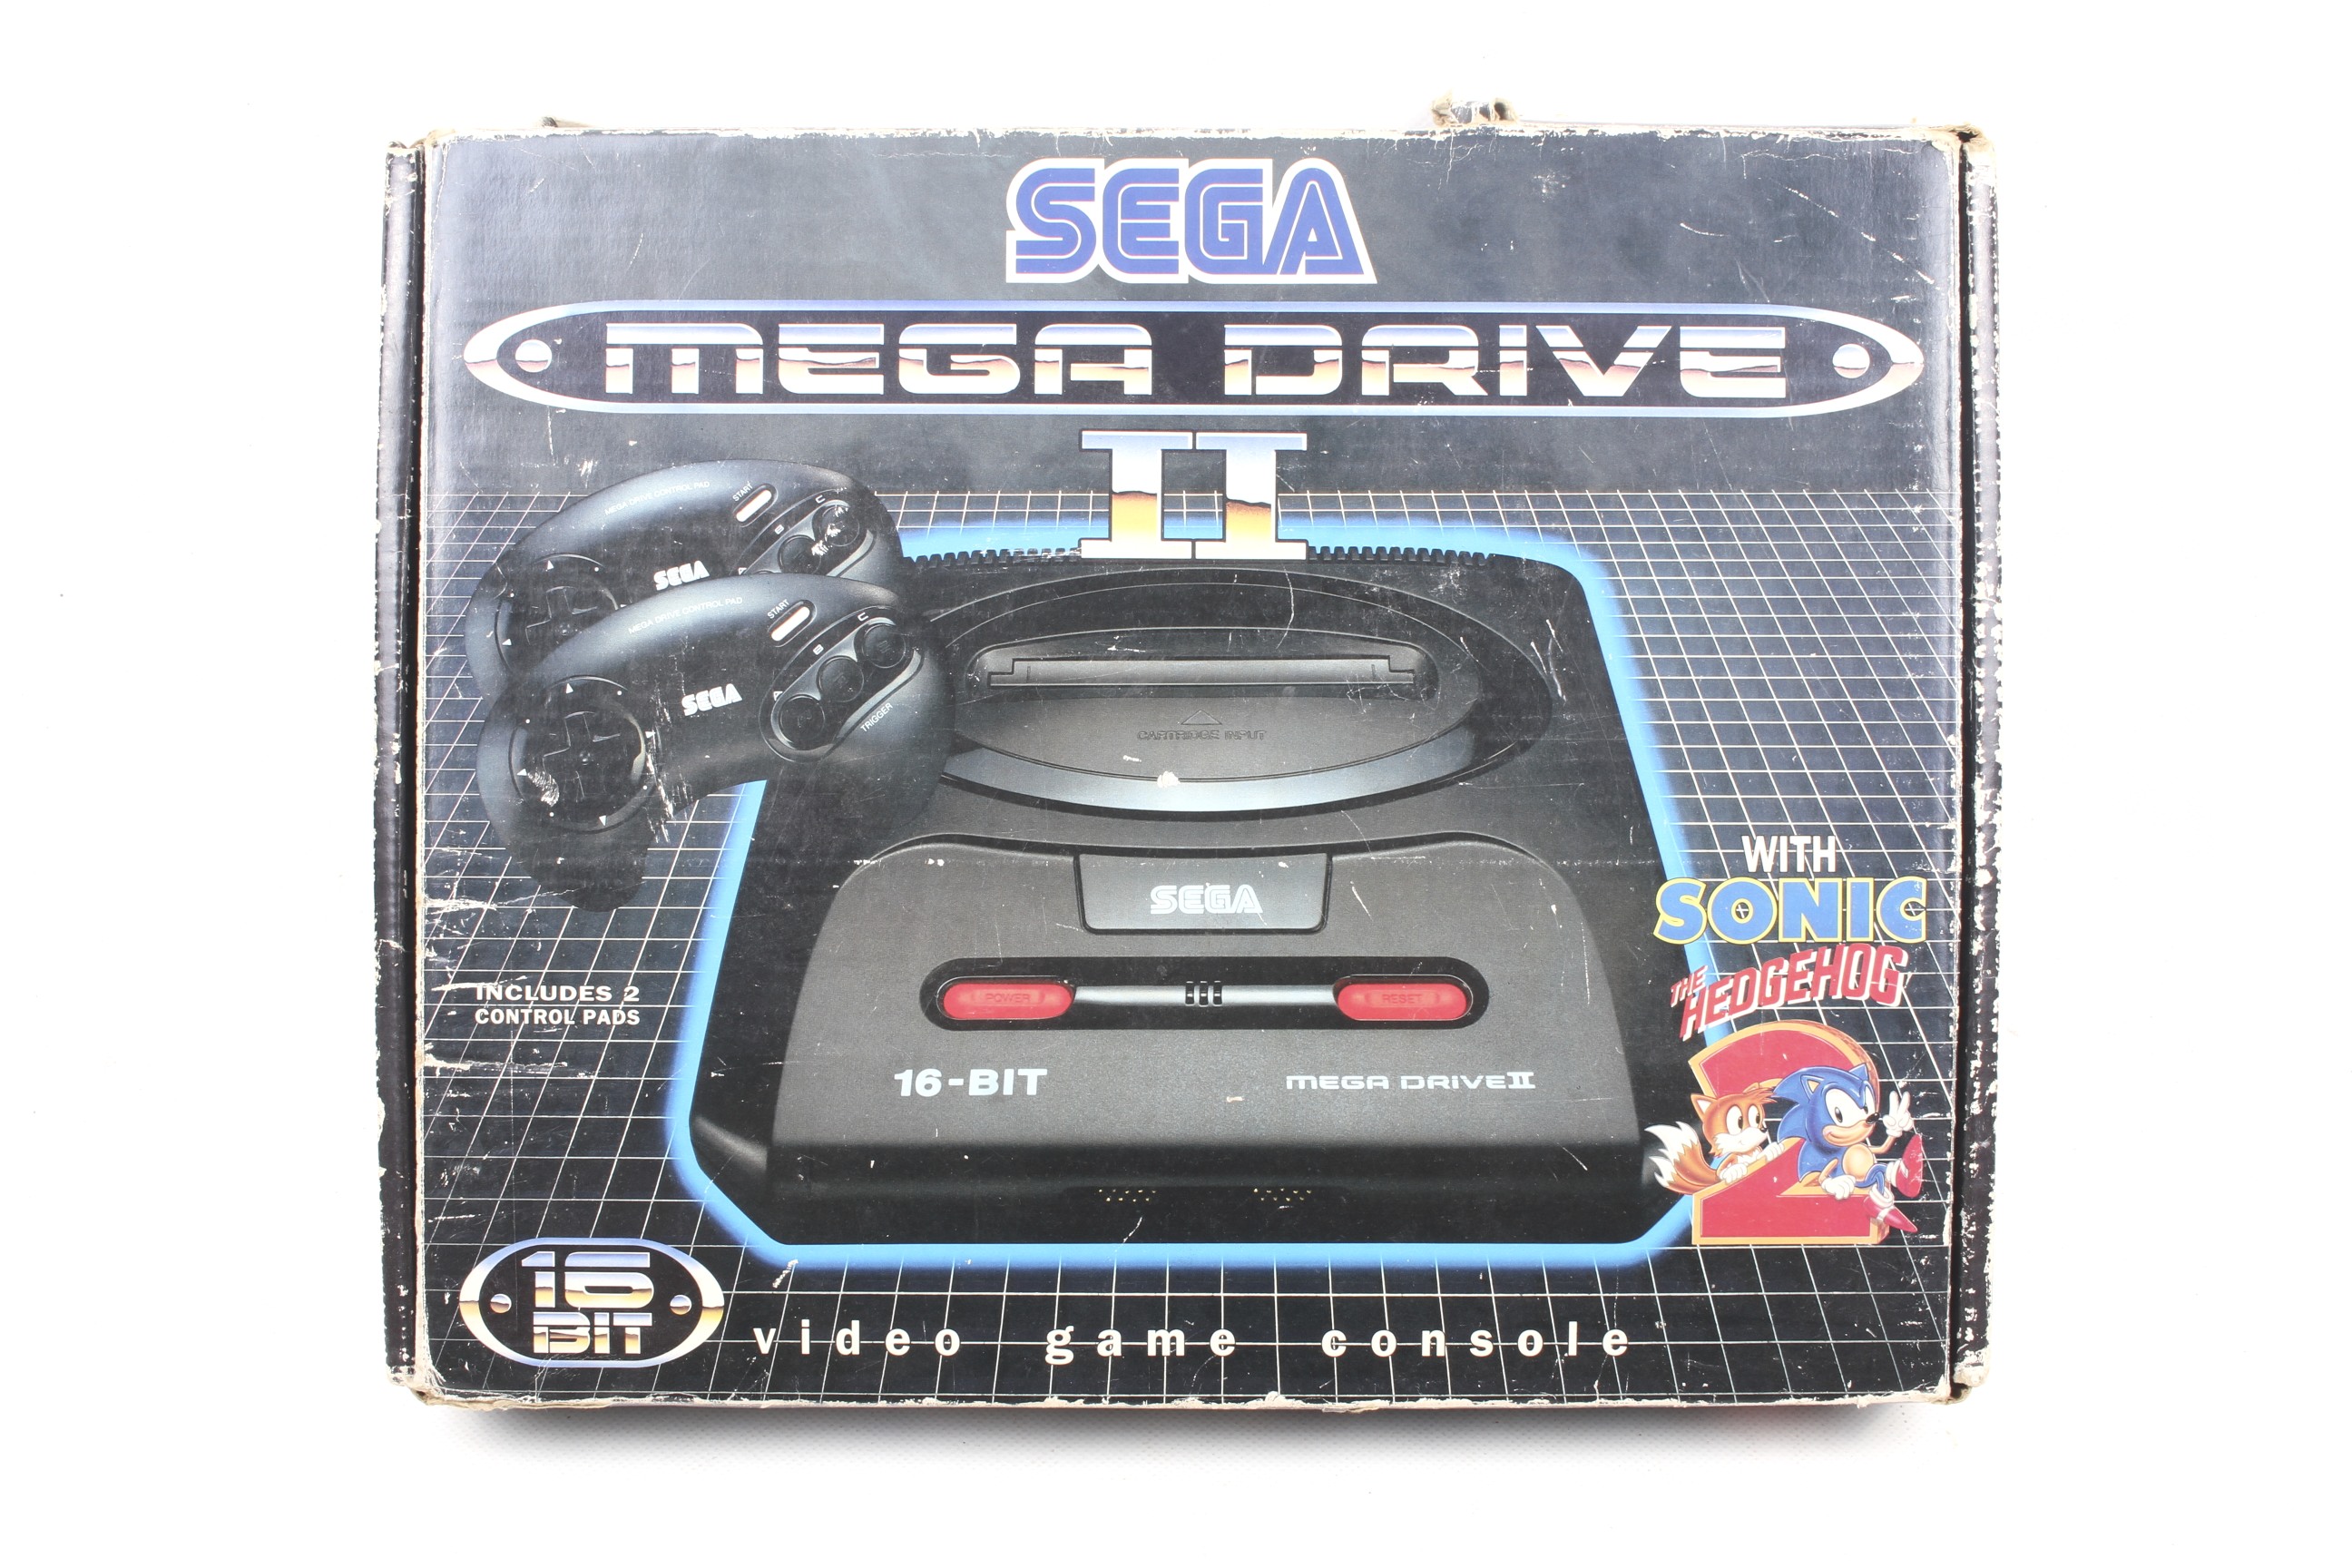 A Sega Mega Drive 2 video game console plus games.